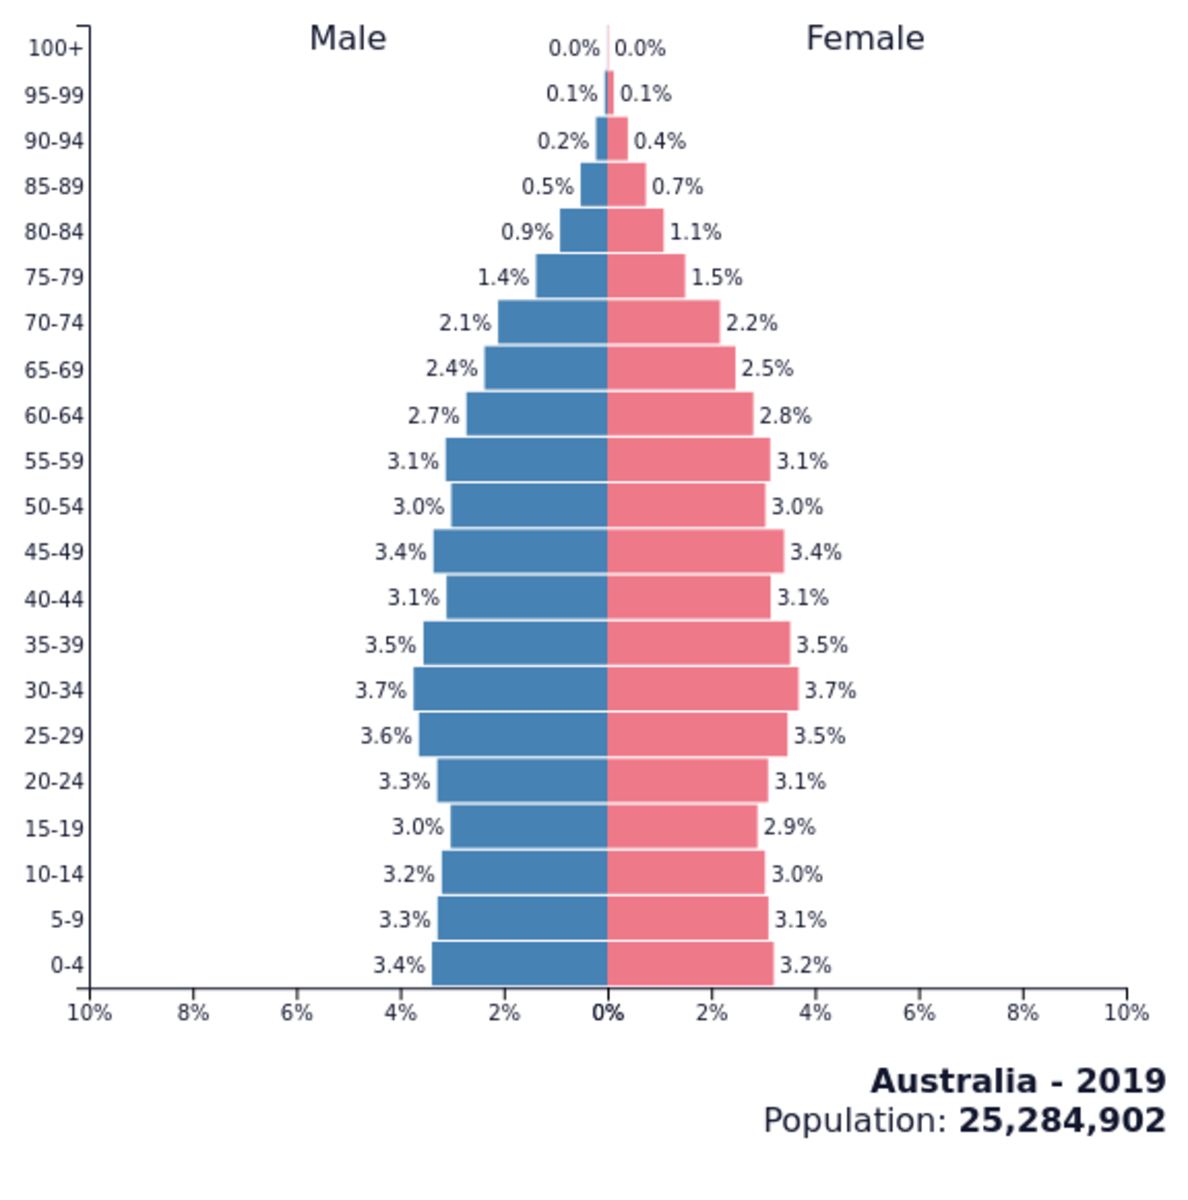 Australia population pyramid